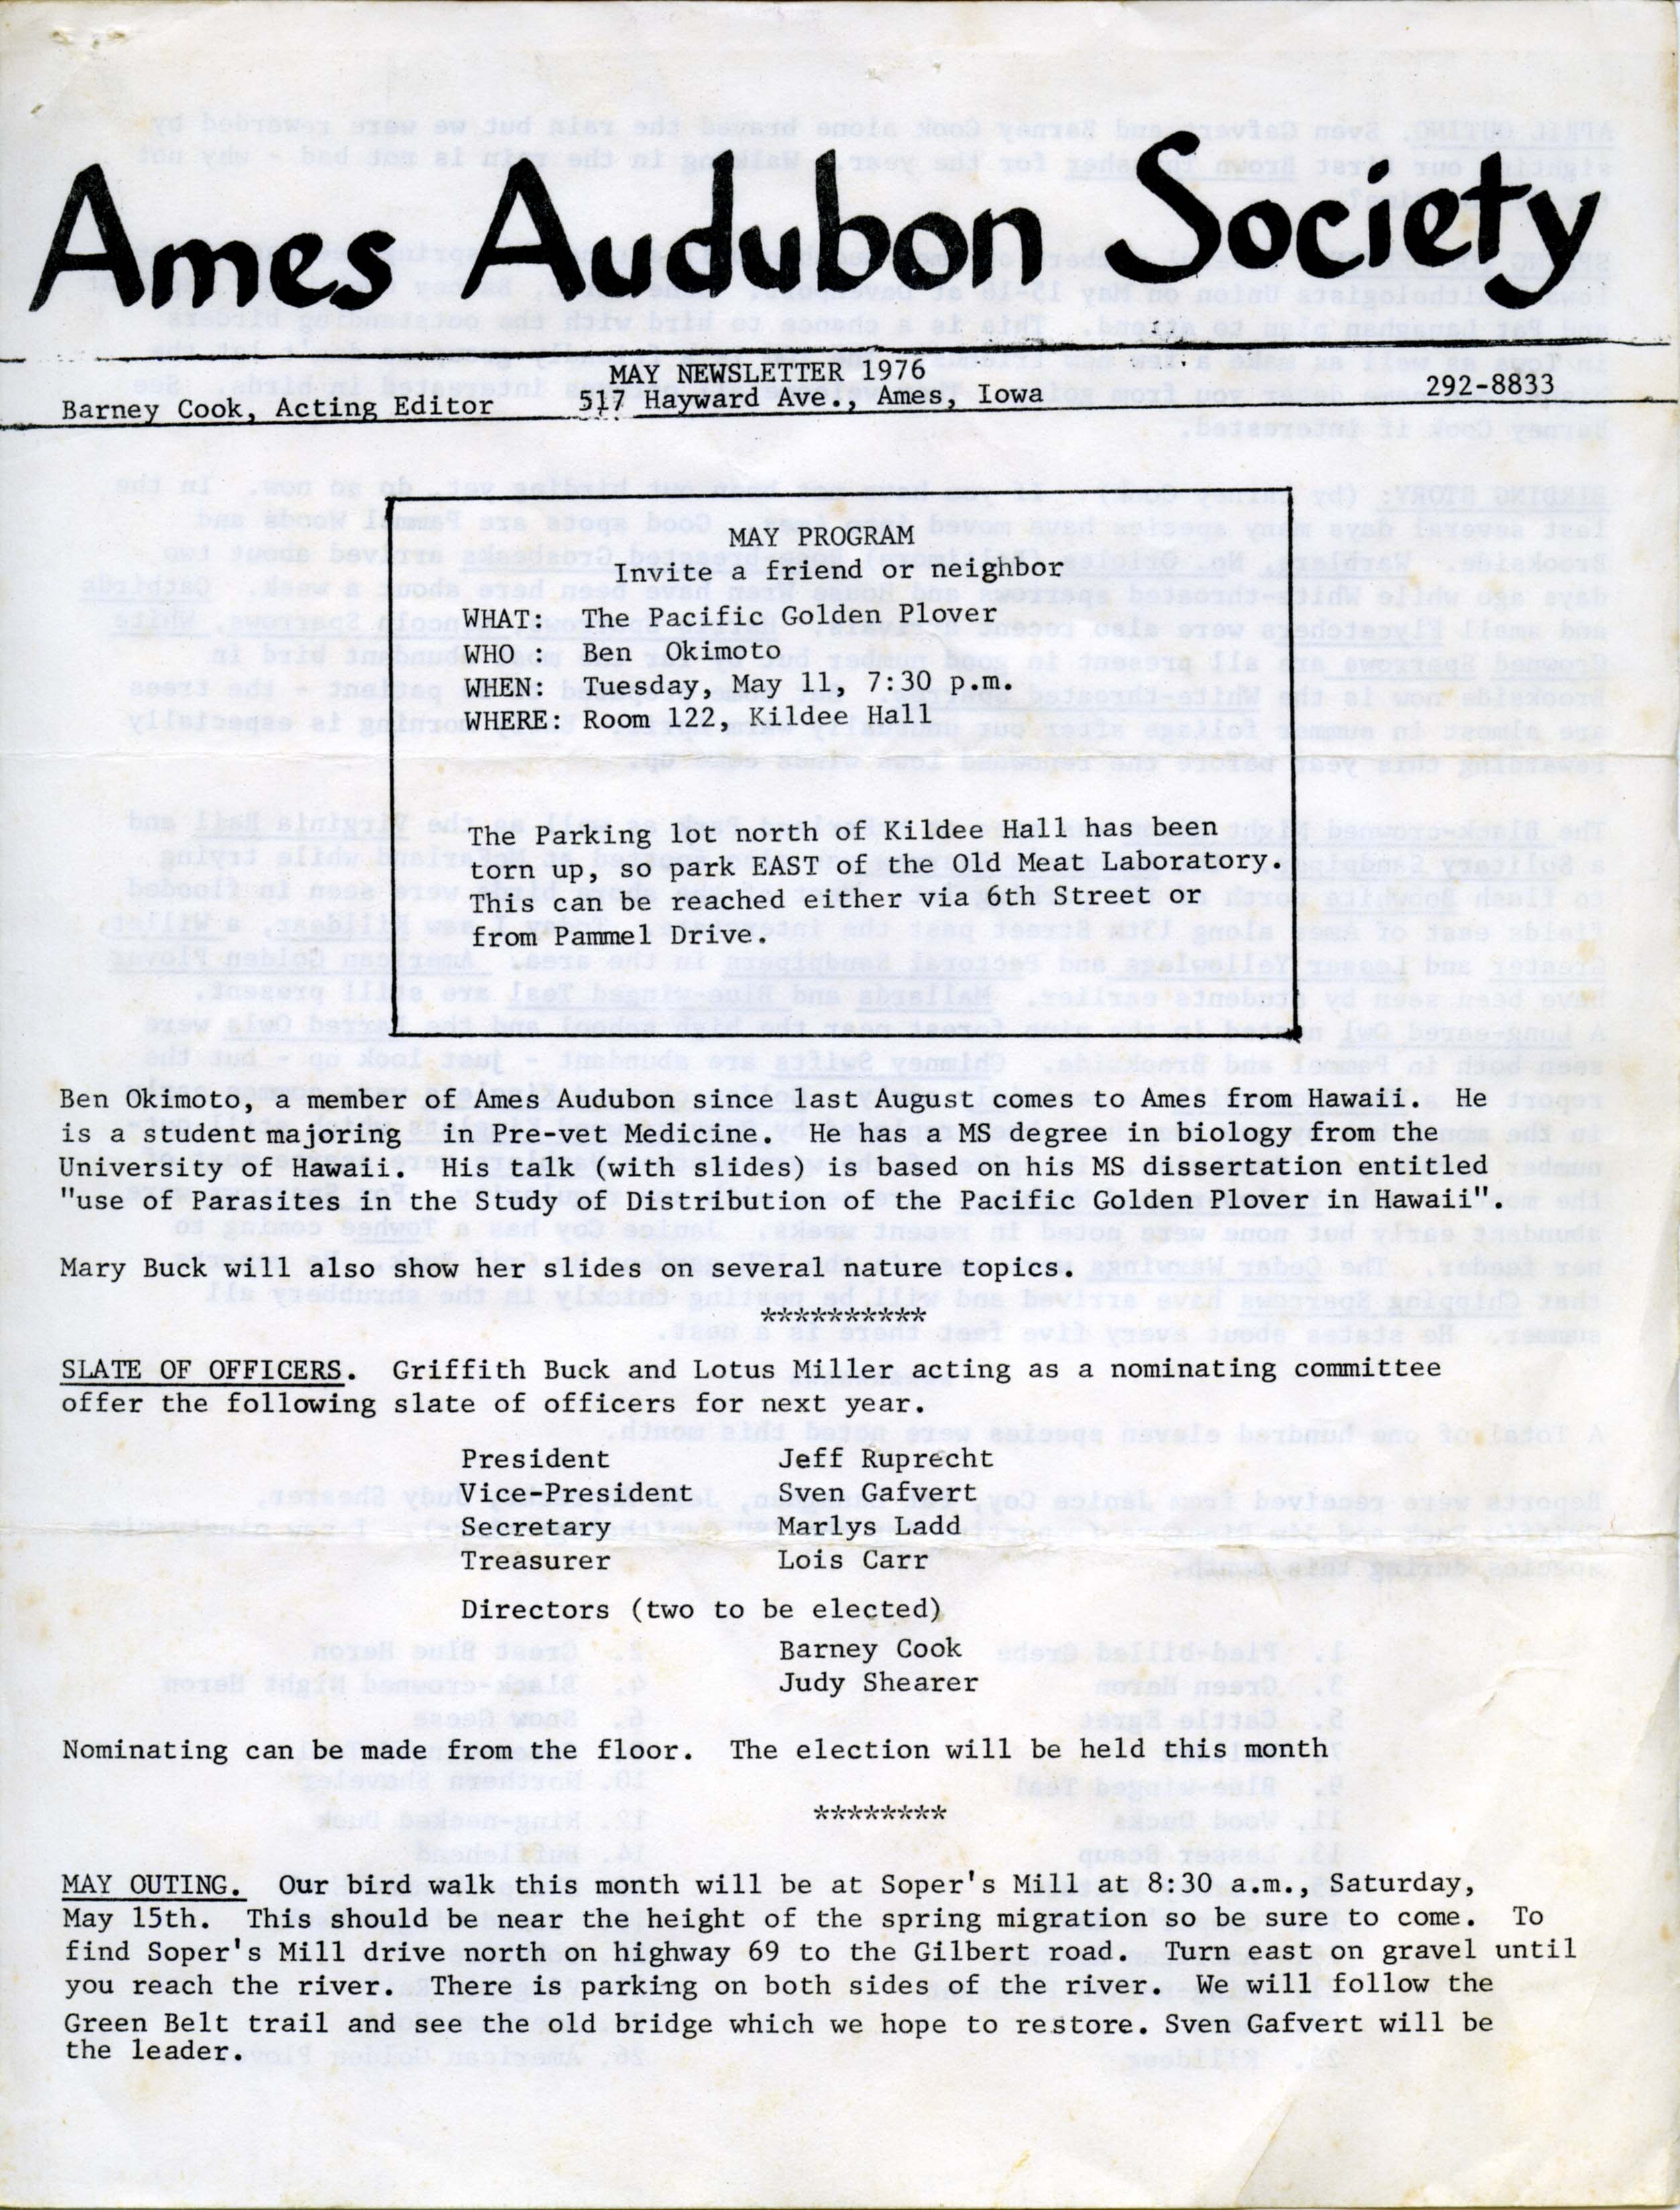 Ames Audubon Society May Newsletter, 1976 